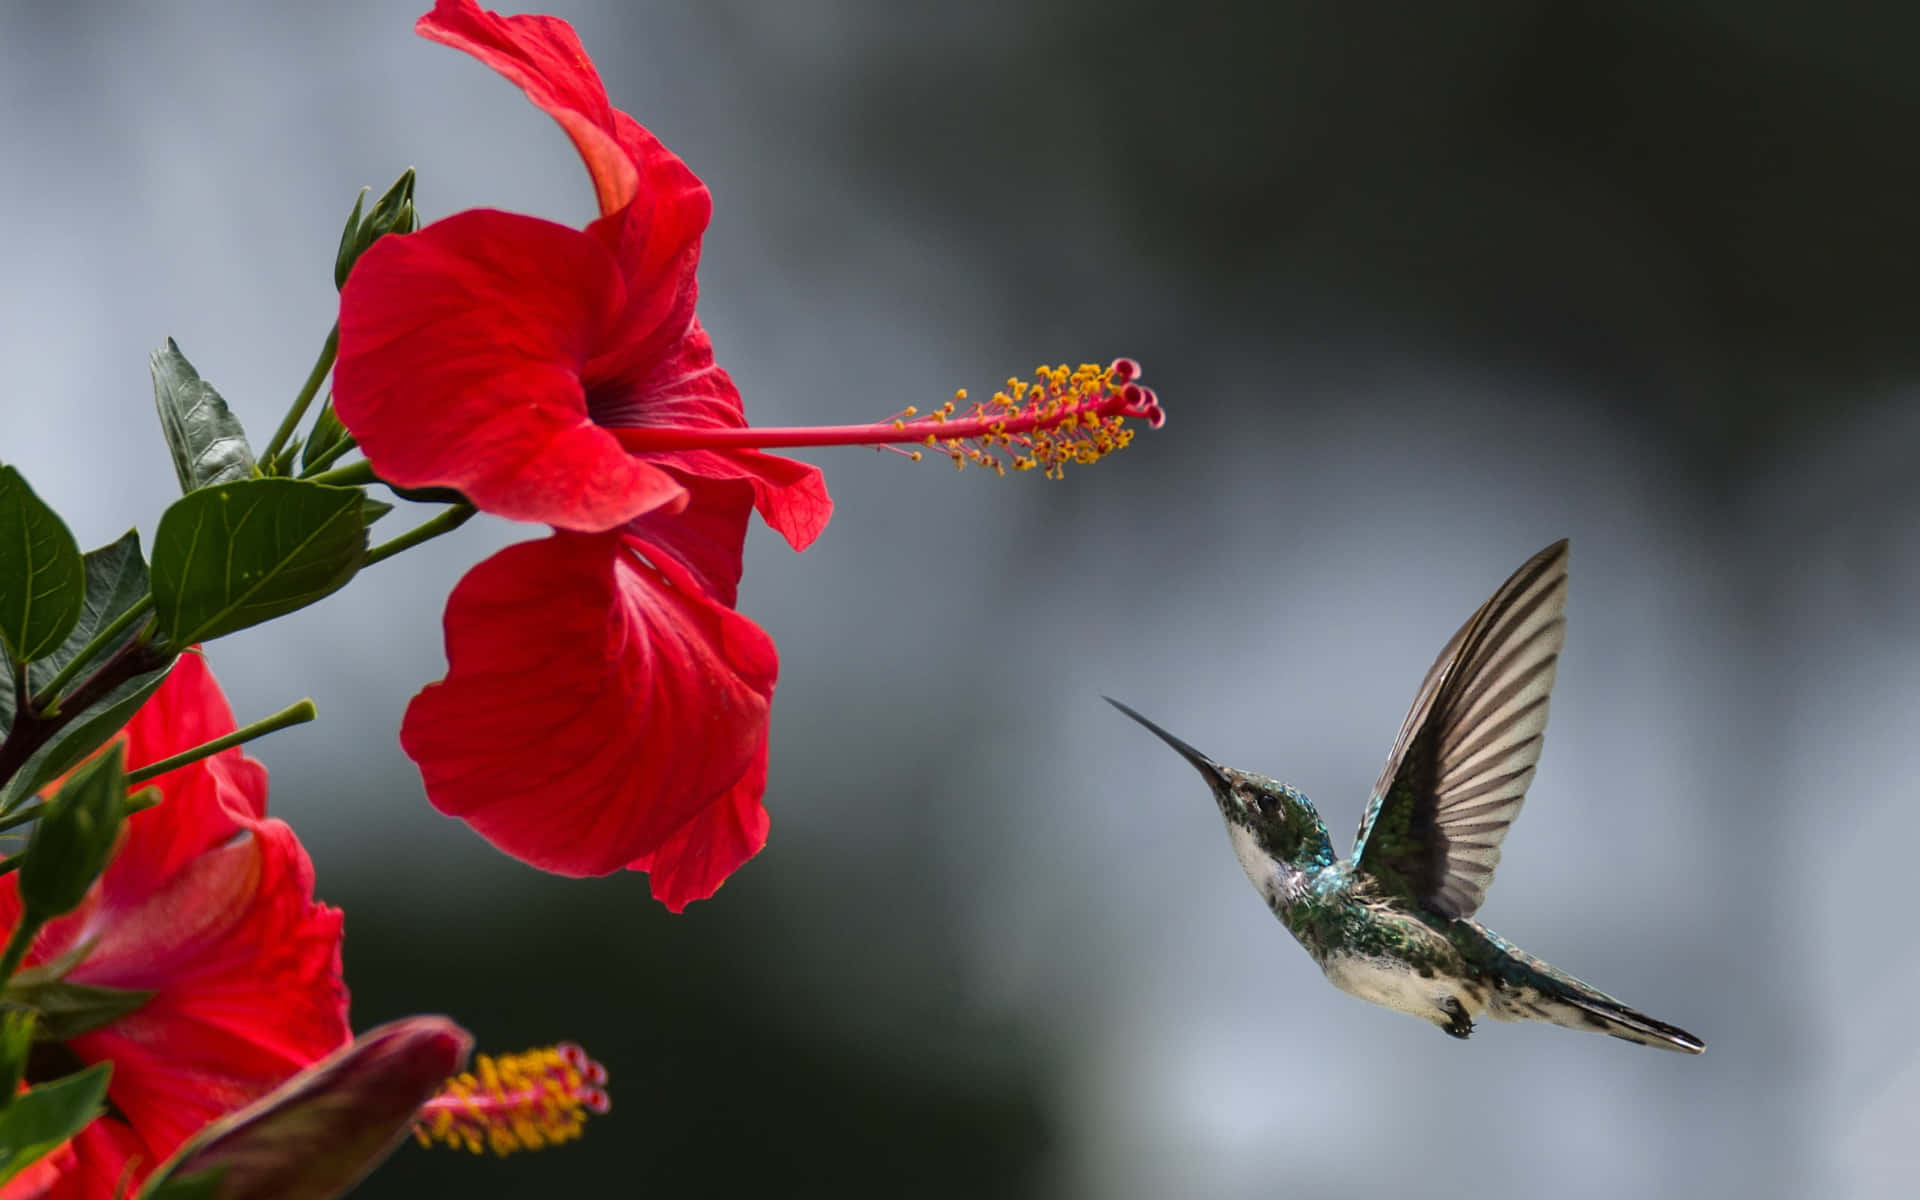 A female hummingbird carrying pollen on its beak.